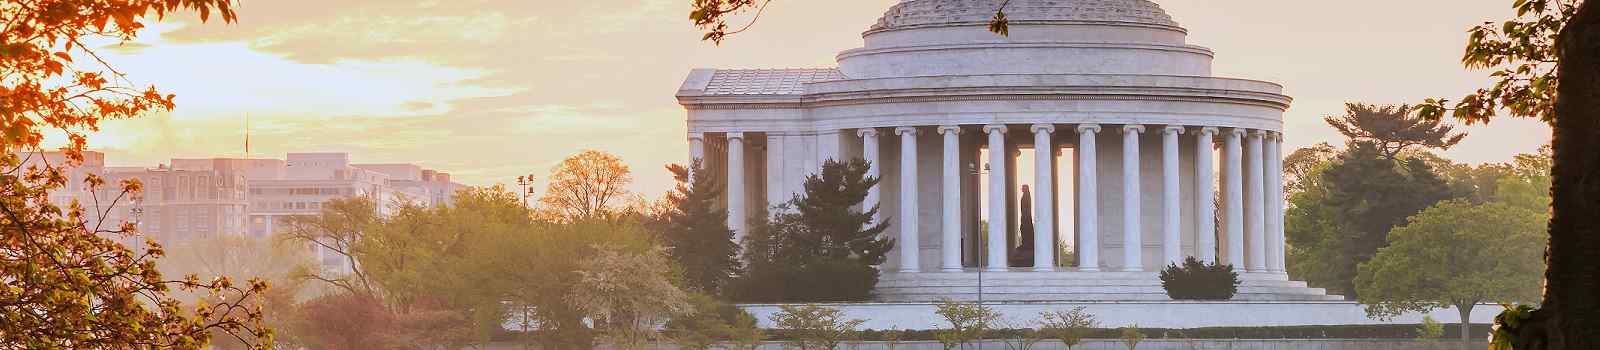 BUS-SIEDLER -Washington DC the Jefferson Memorial during the Cherry Blossom Festival2